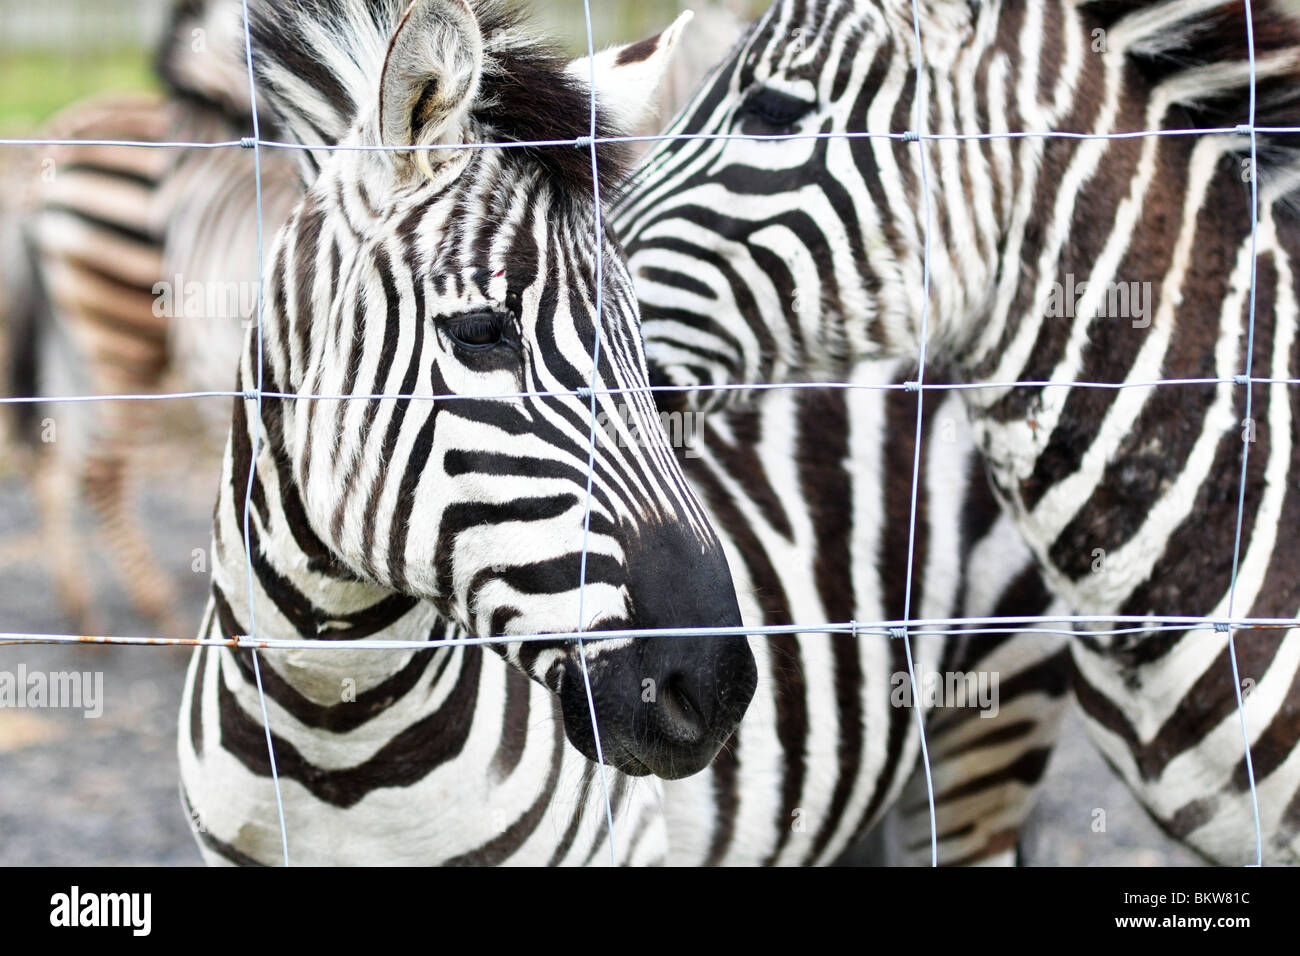 Zebras in captivity in a zoo, Scotland UK Stock Photo